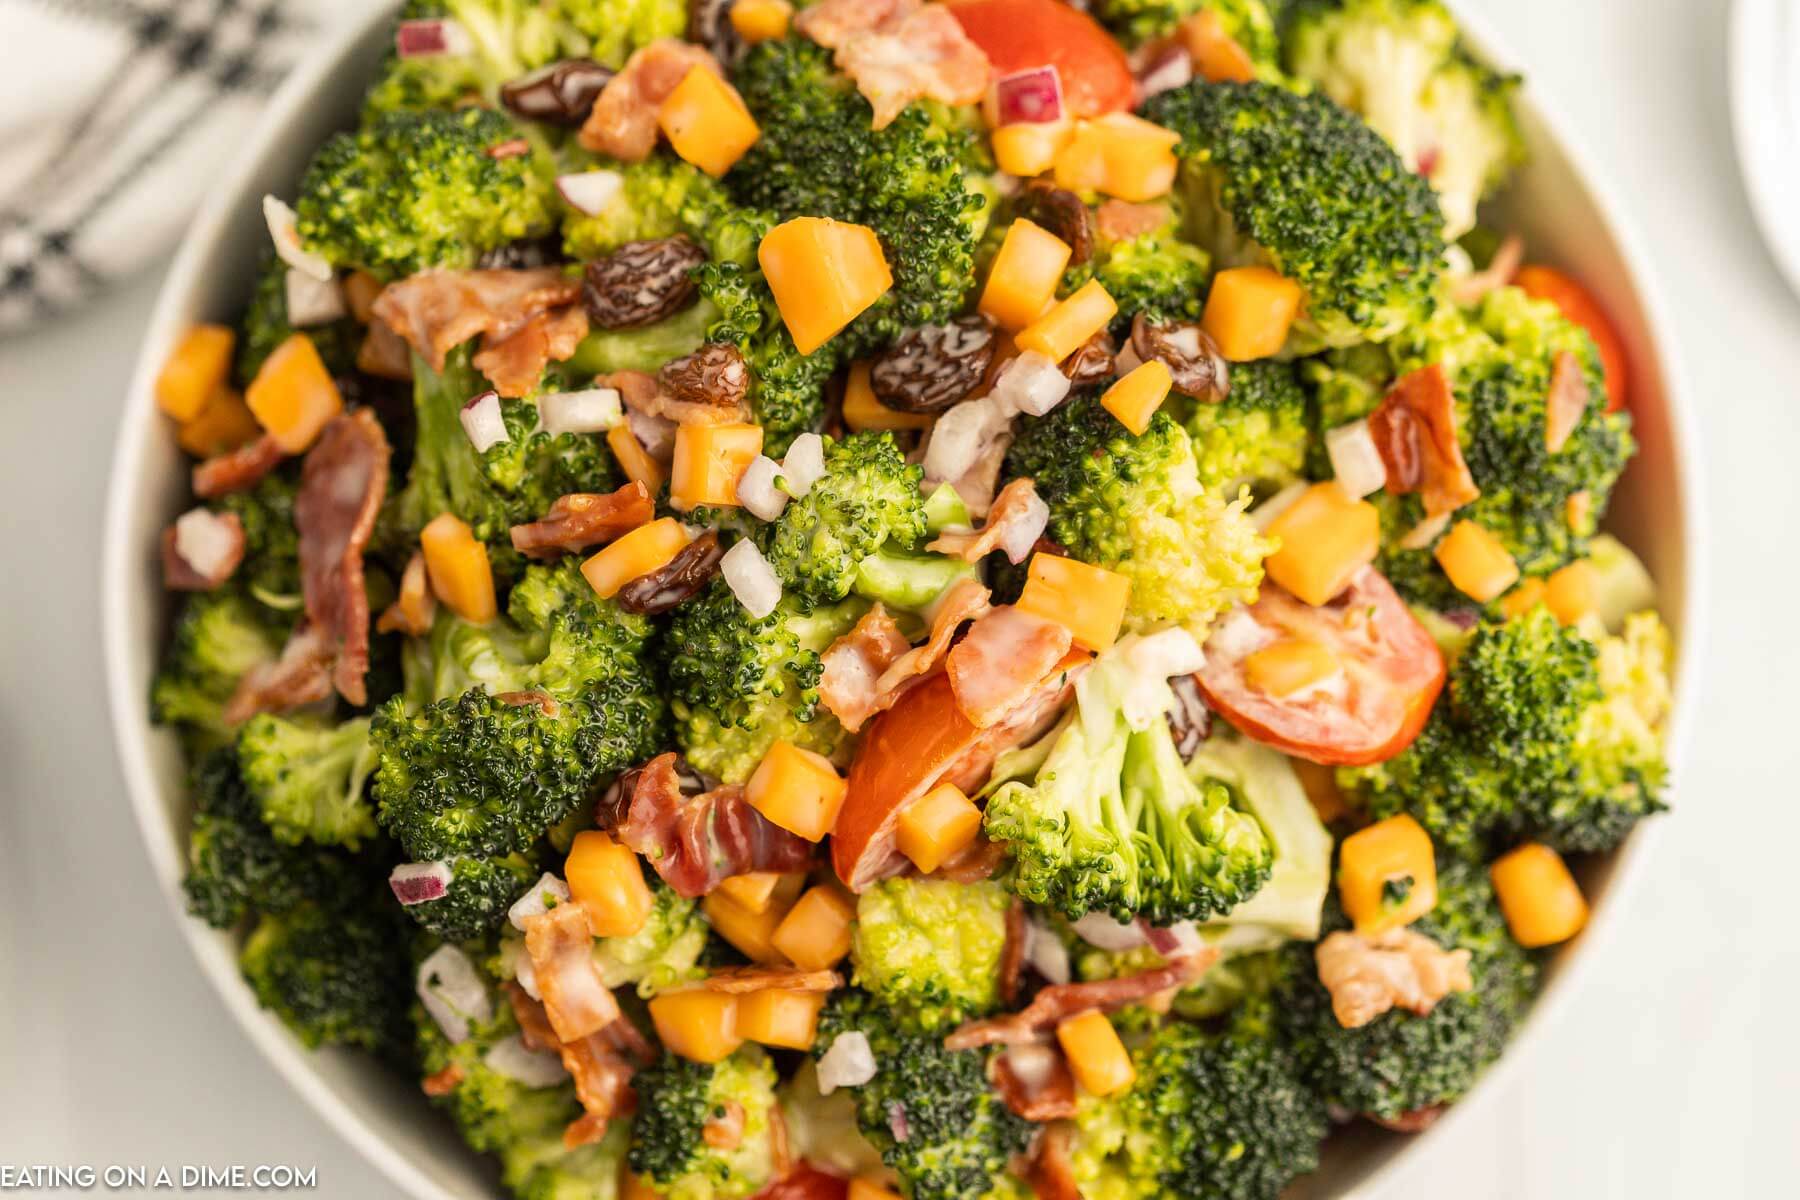 A bowl of broccoli salad